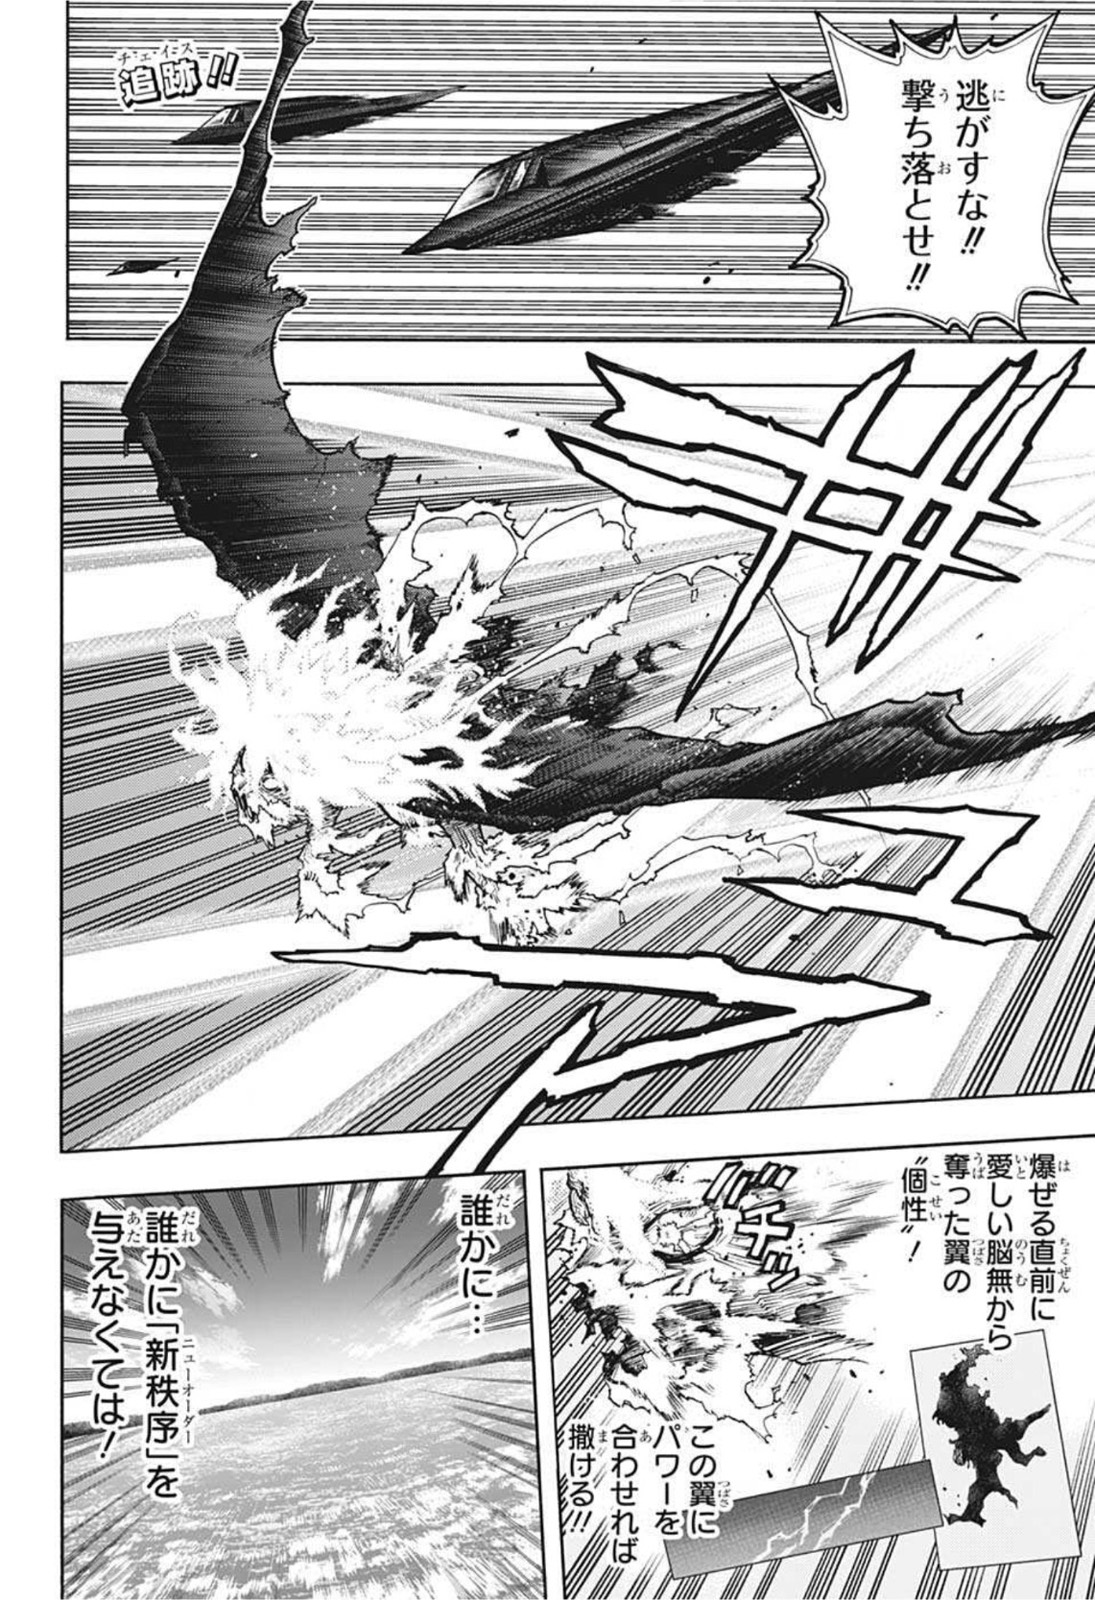 Boku no Hero Academia - Chapter 334 - Page 2